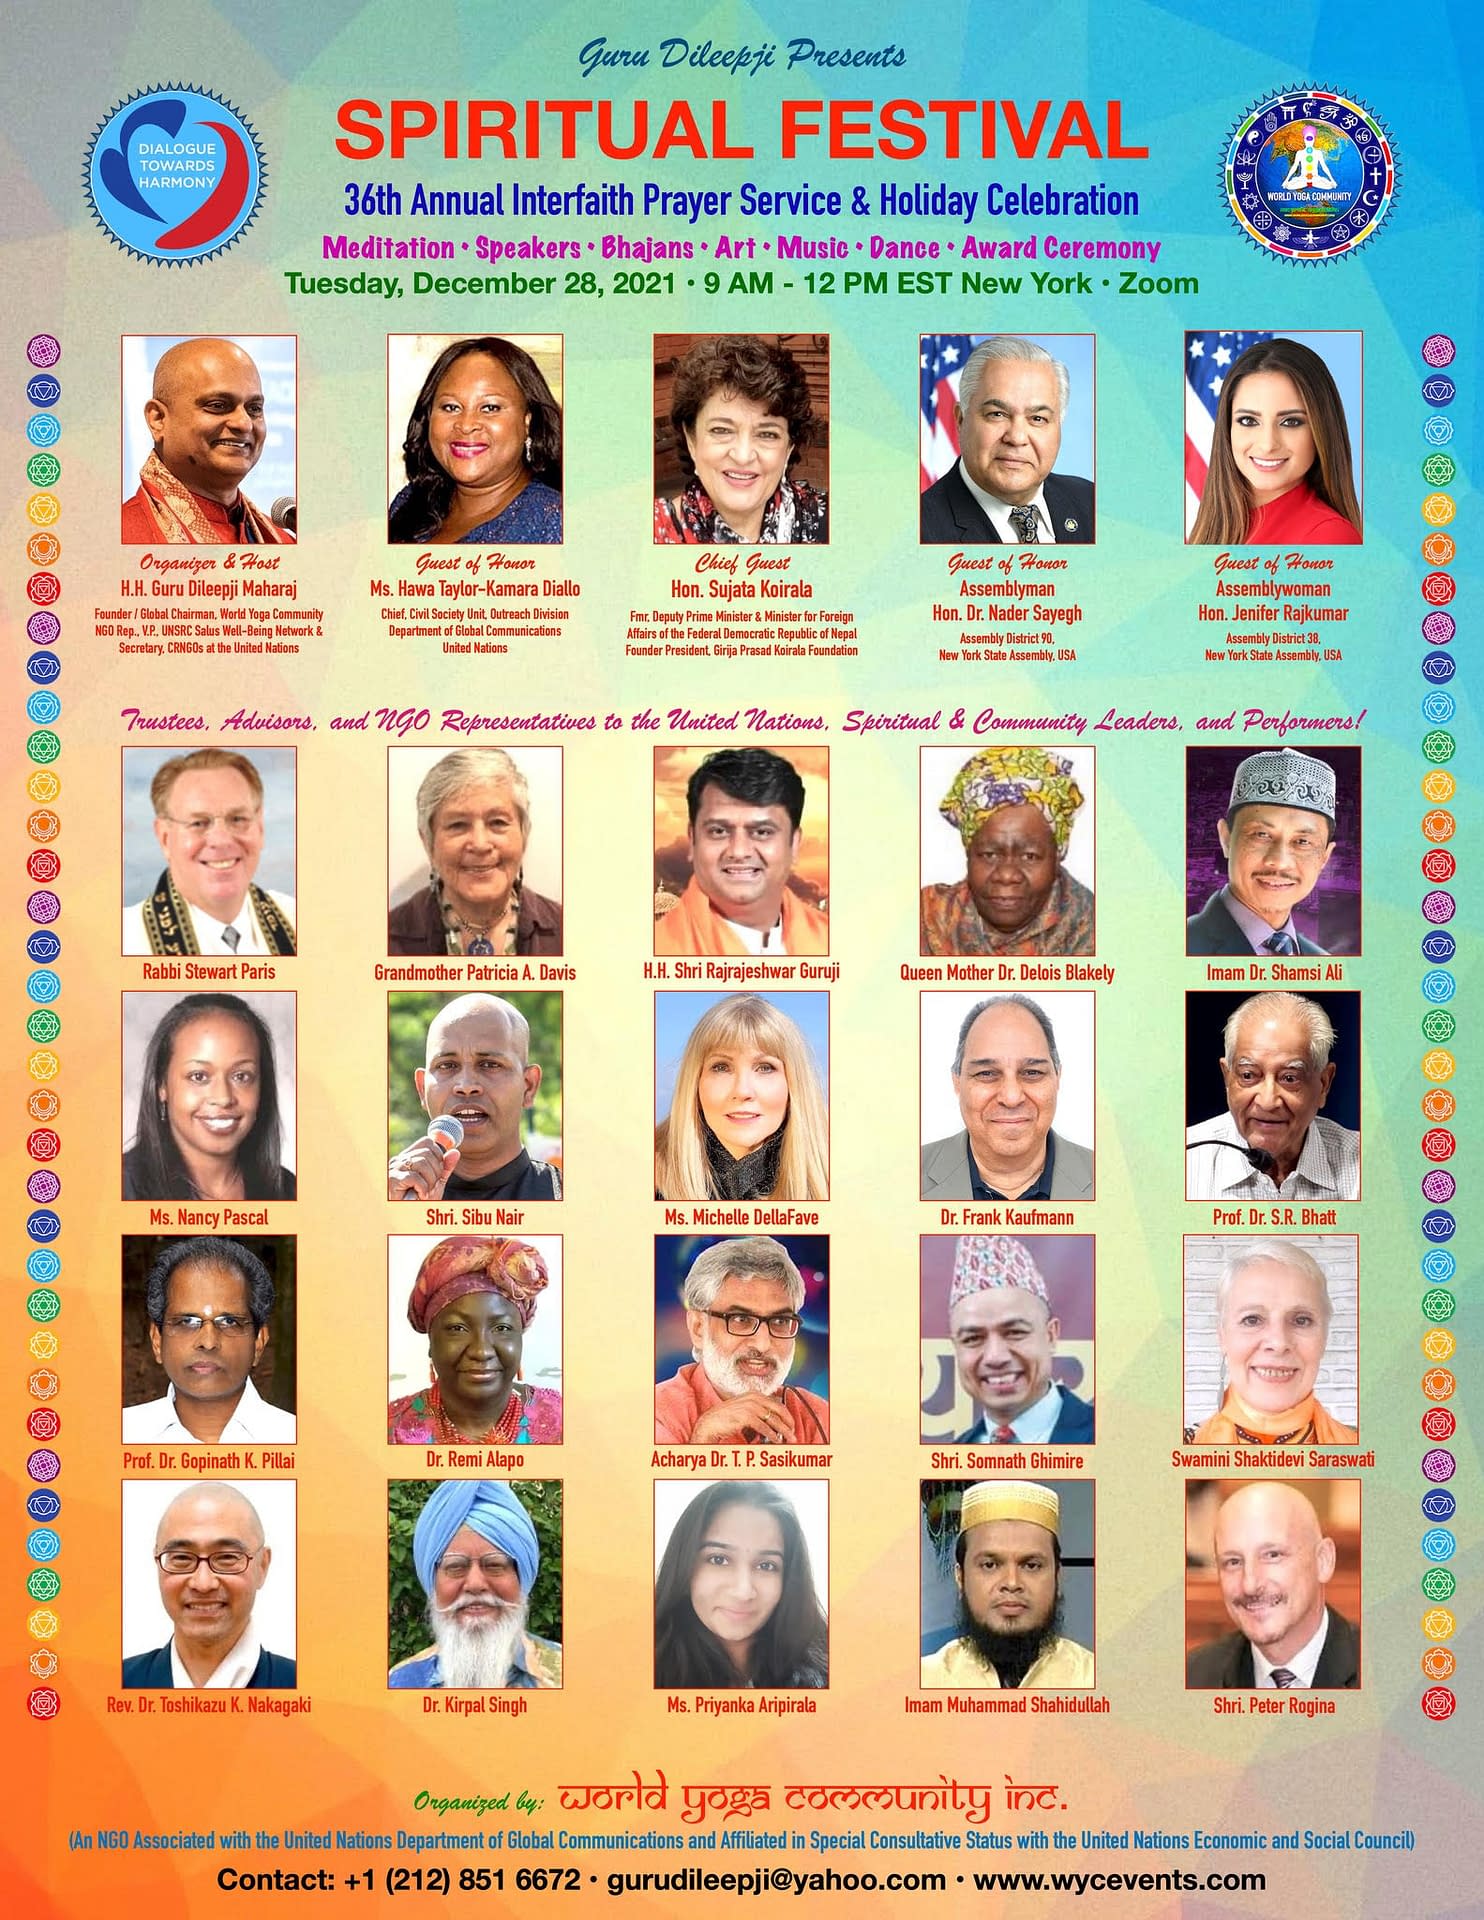 Twelve Gates Foundation President Speaks at the 36th Annual Interfaith Prayer Festival